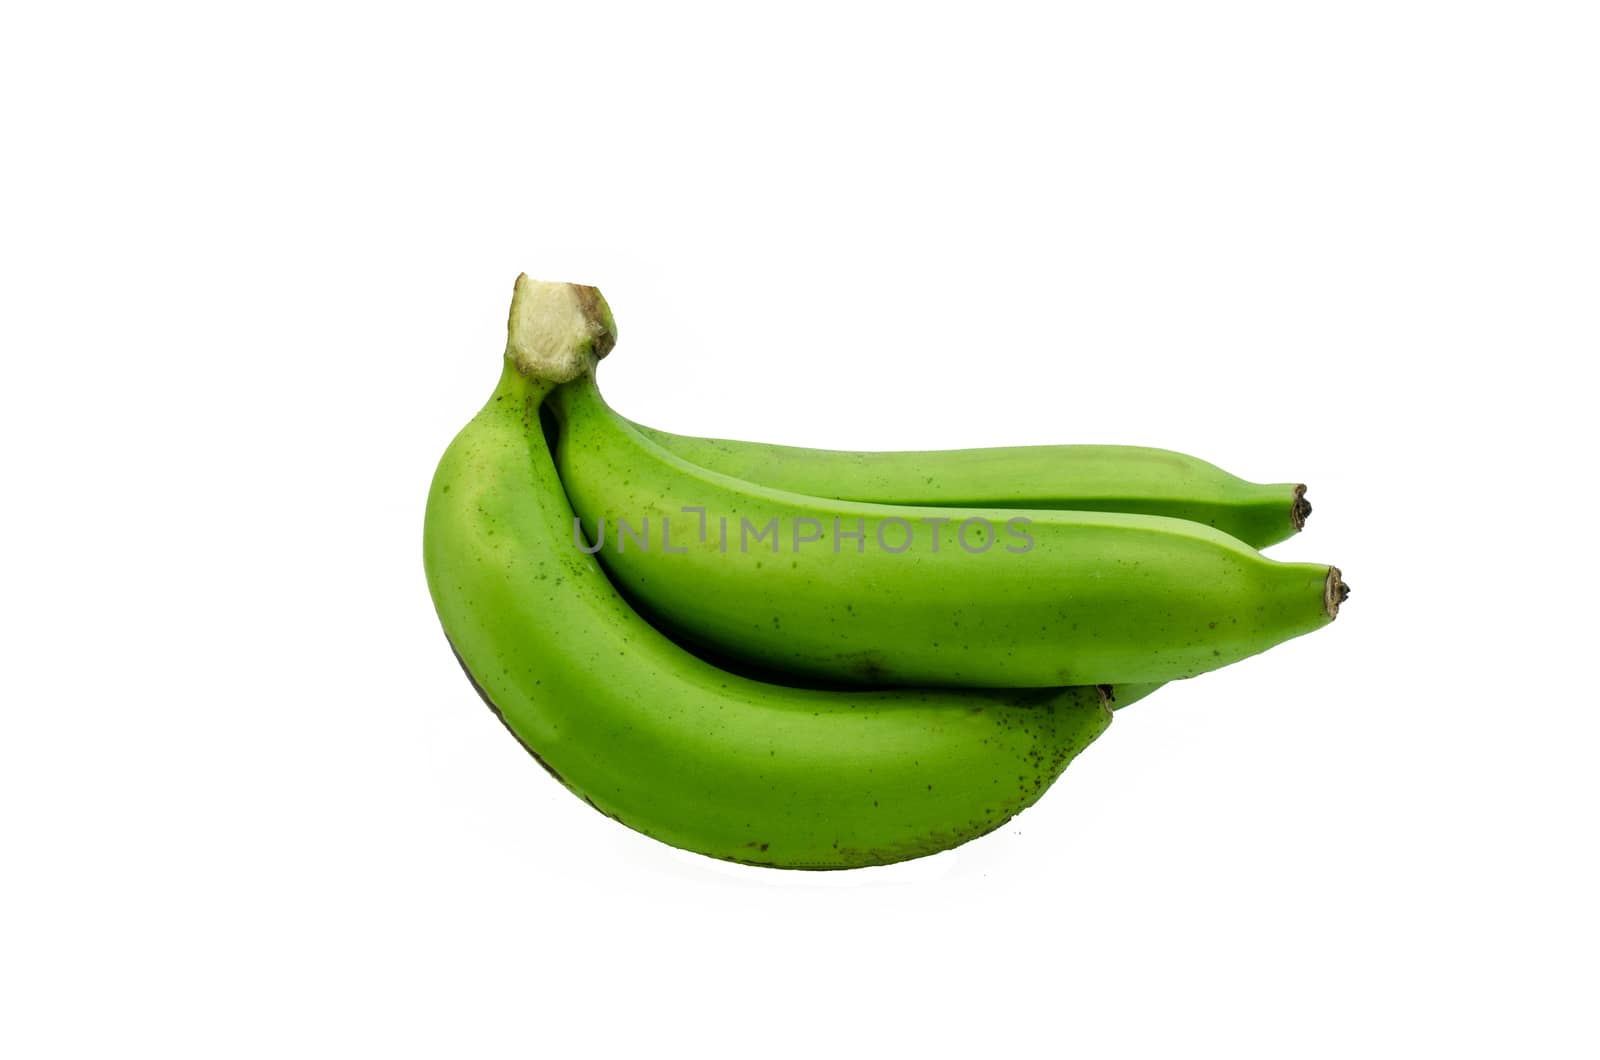 green banana bundle on a white background by photobyphotoboy